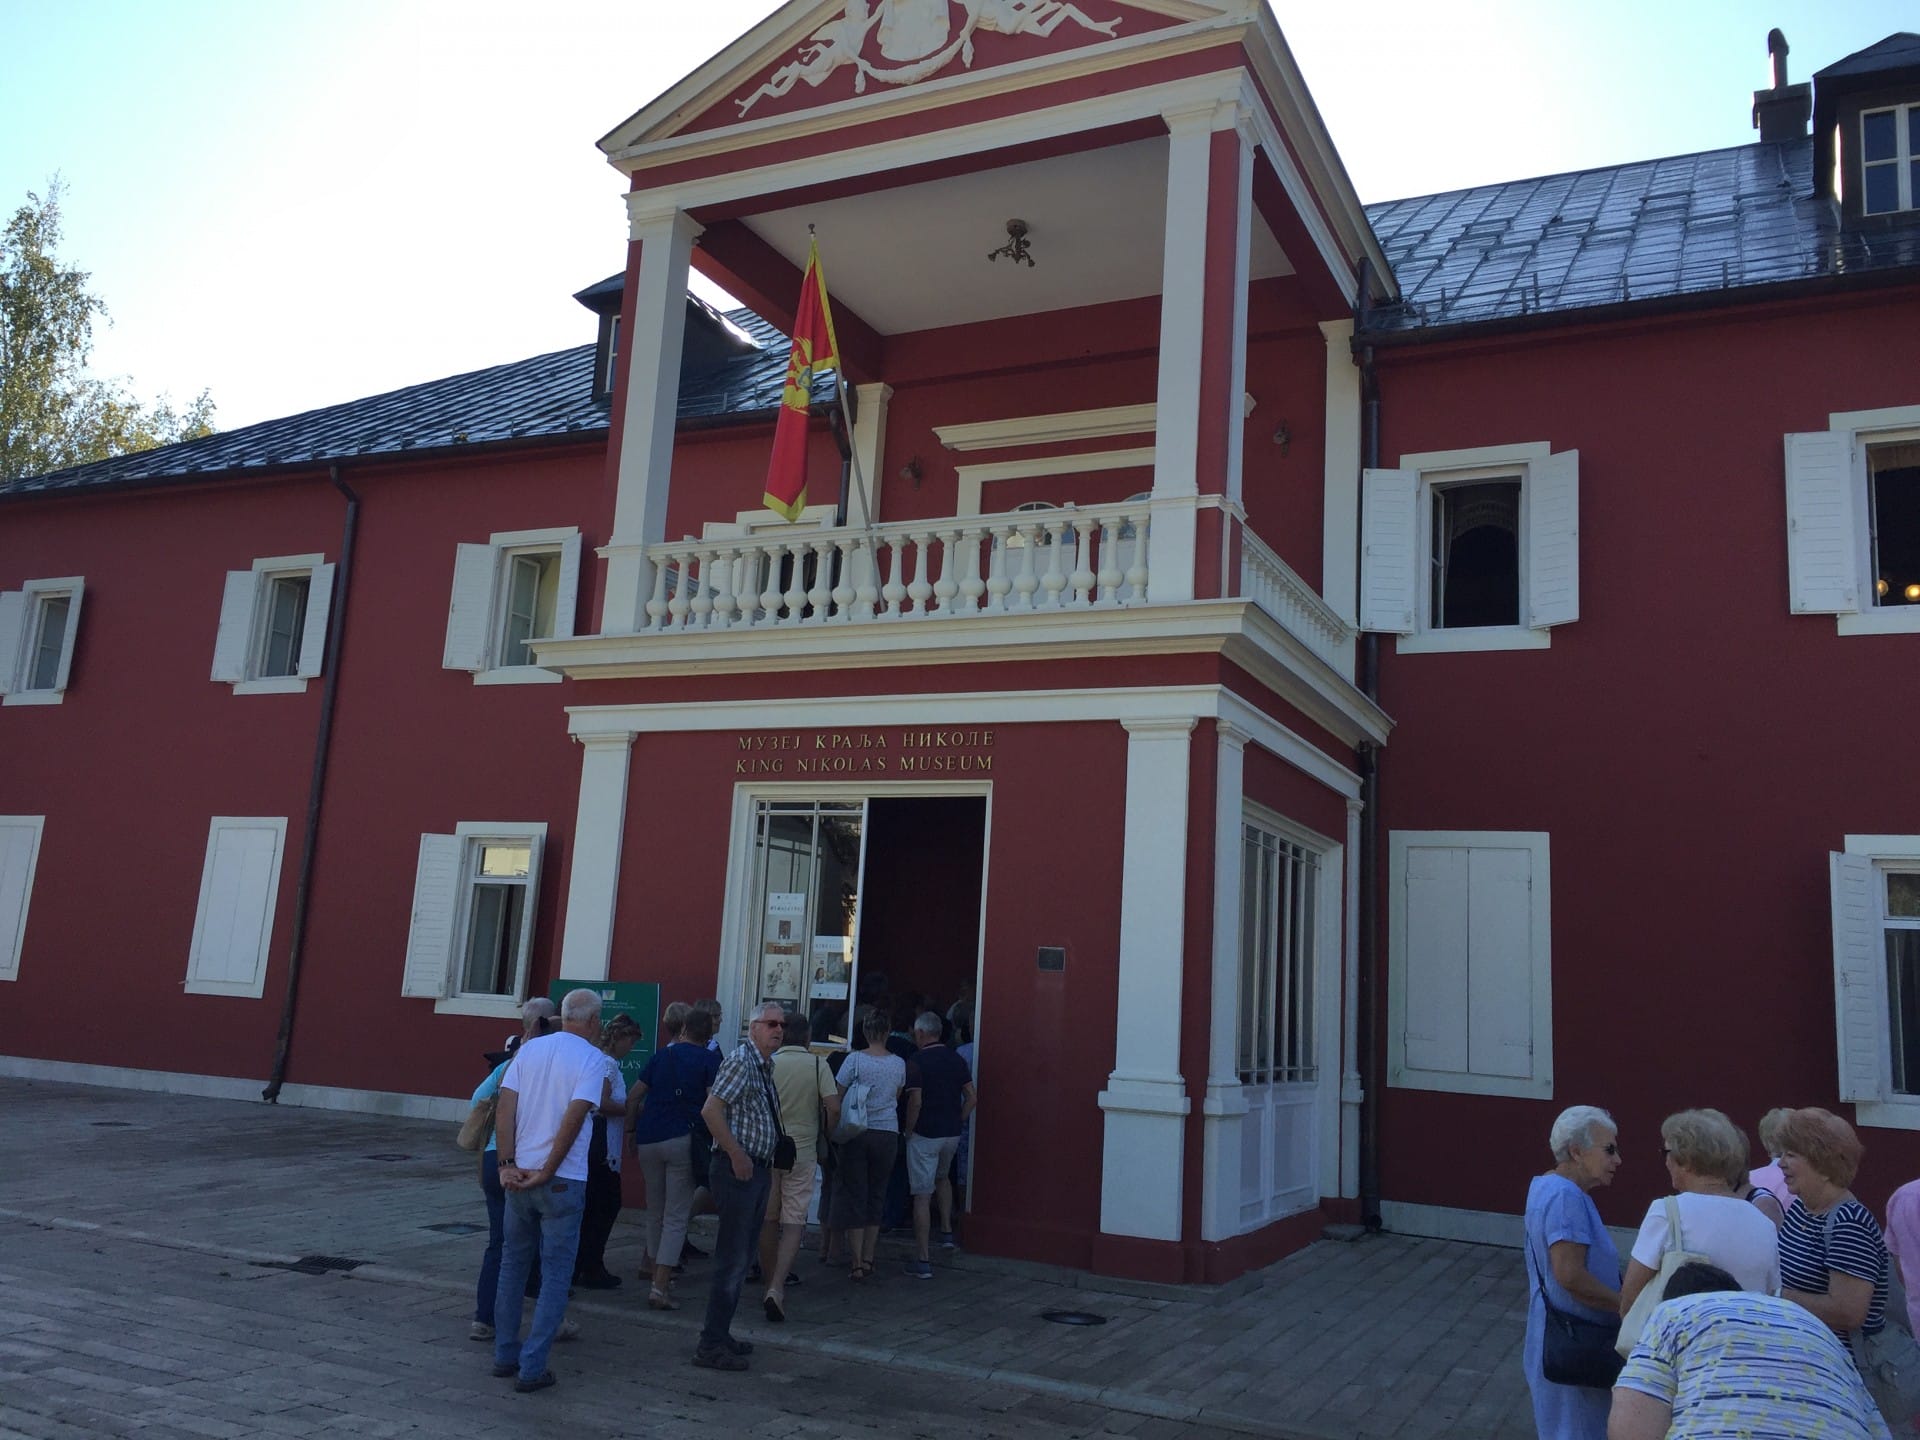 Entrance of King Nikolas Museum Cetinje